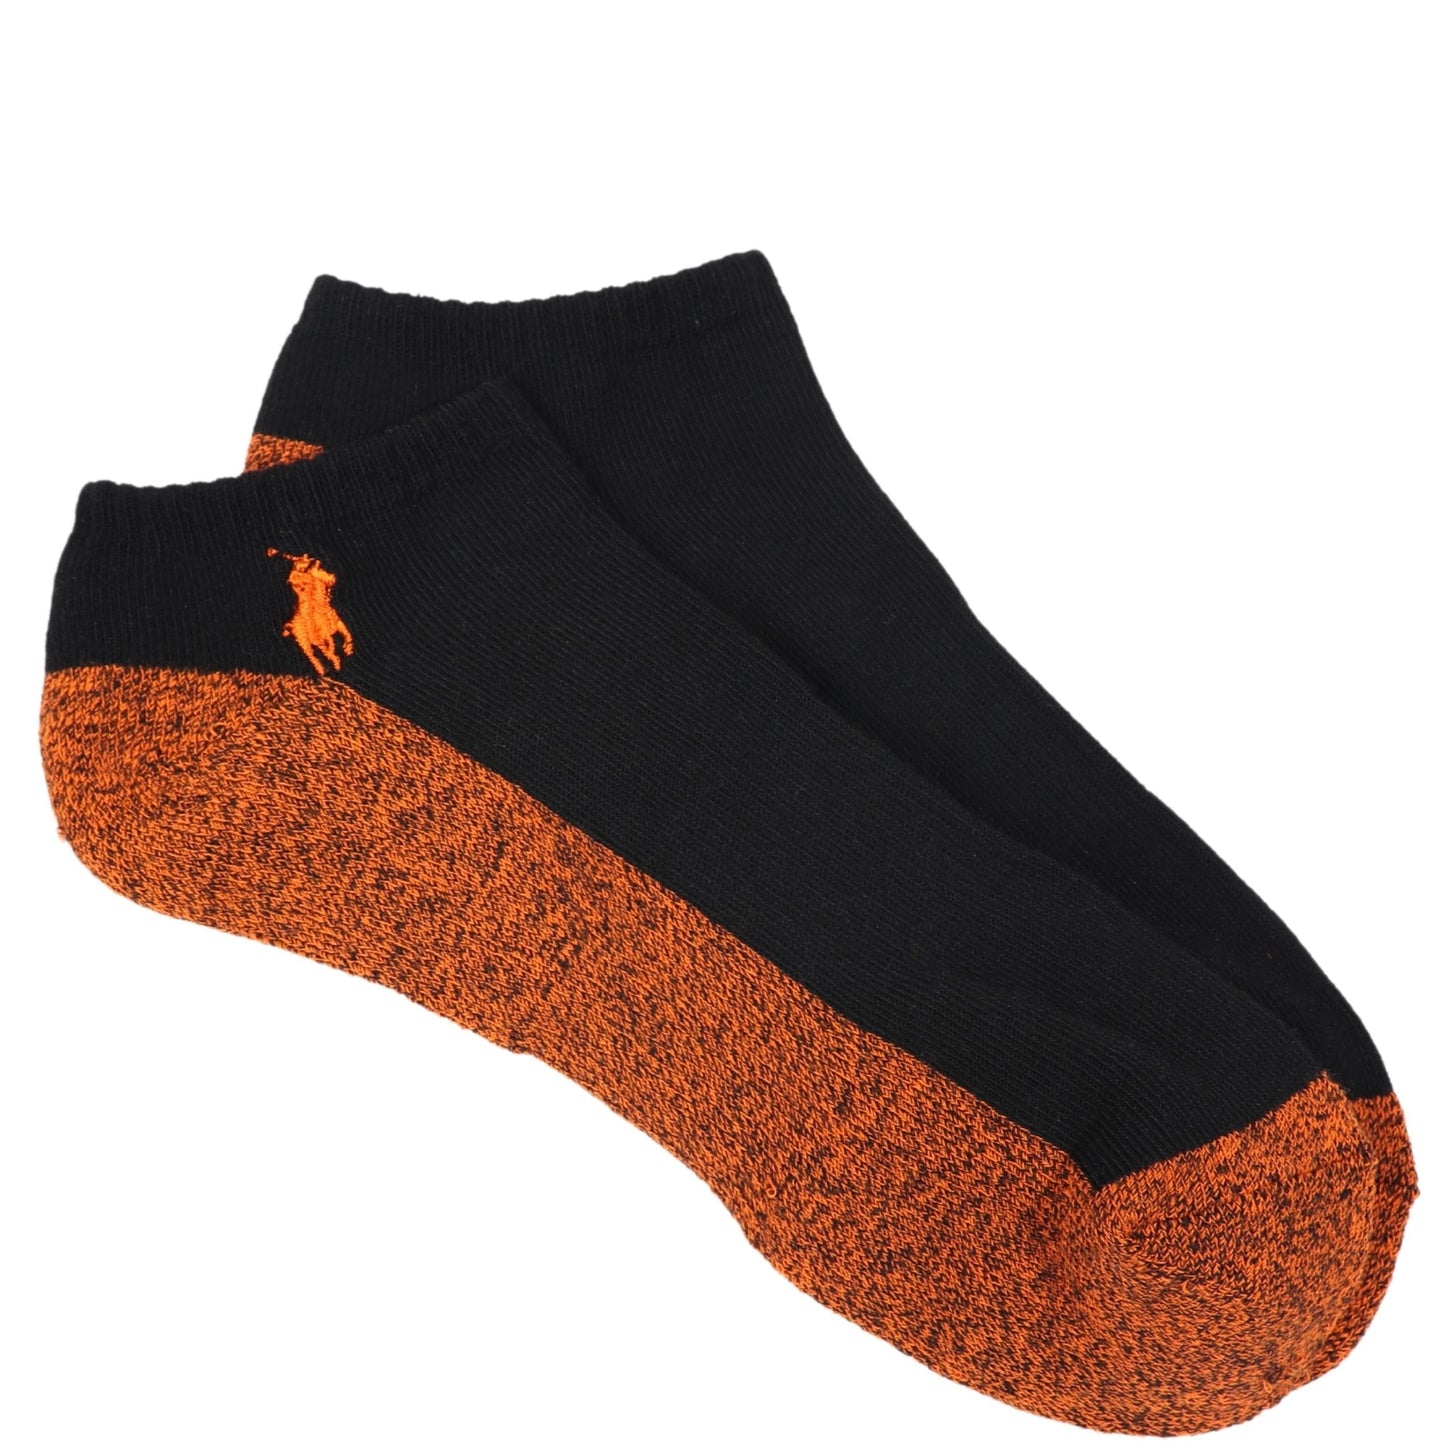 RALPH LAUREN Socks 40-45 / Multi-Color RALPH LAUREN - Soft And Comfortable Socks